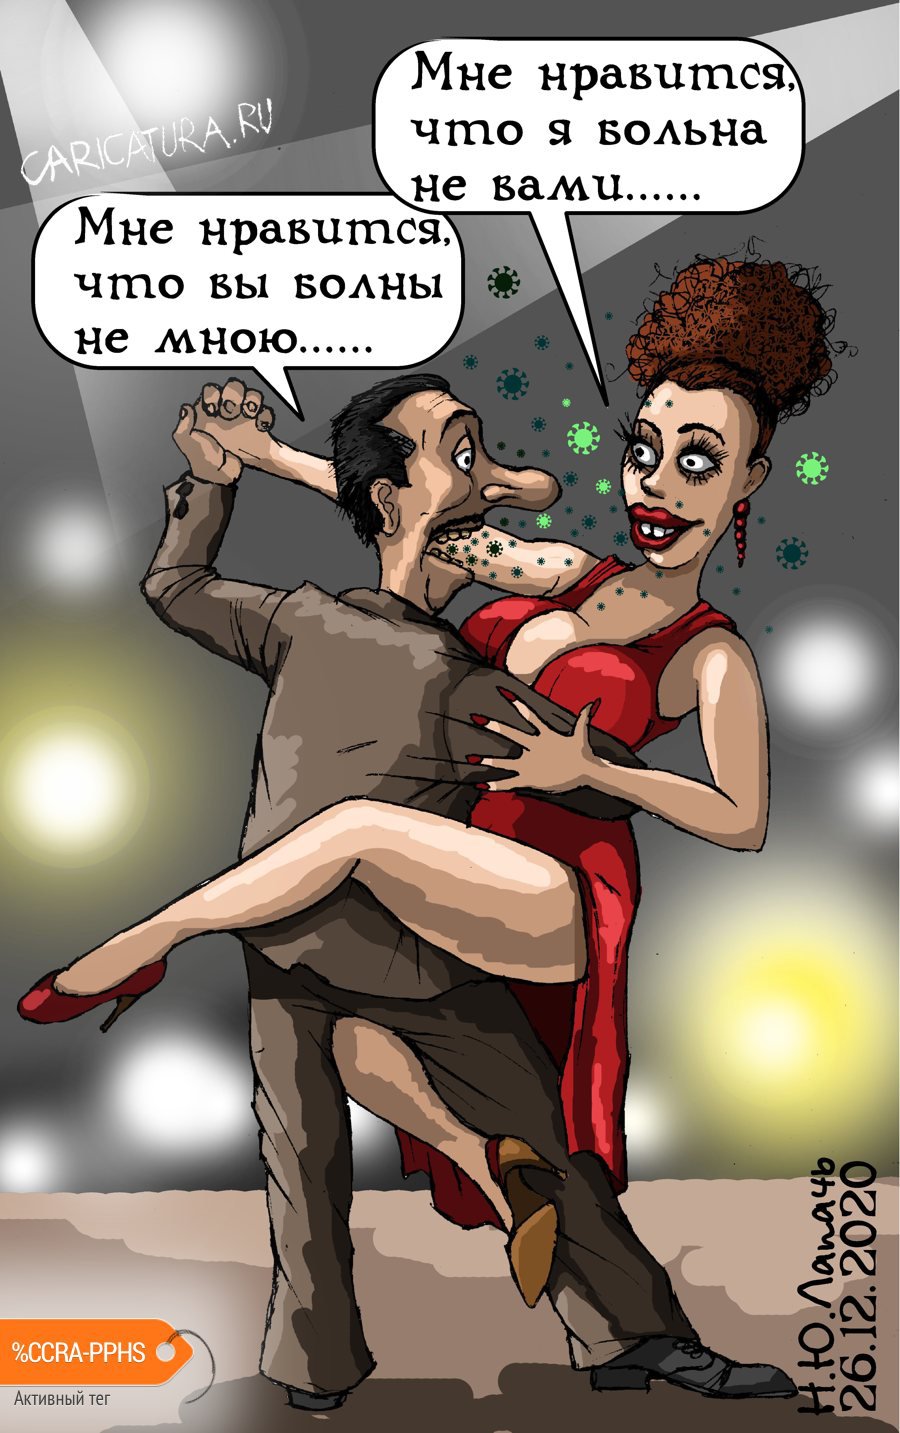 Карикатура "Ирония судьбы", Теплый Телогрей